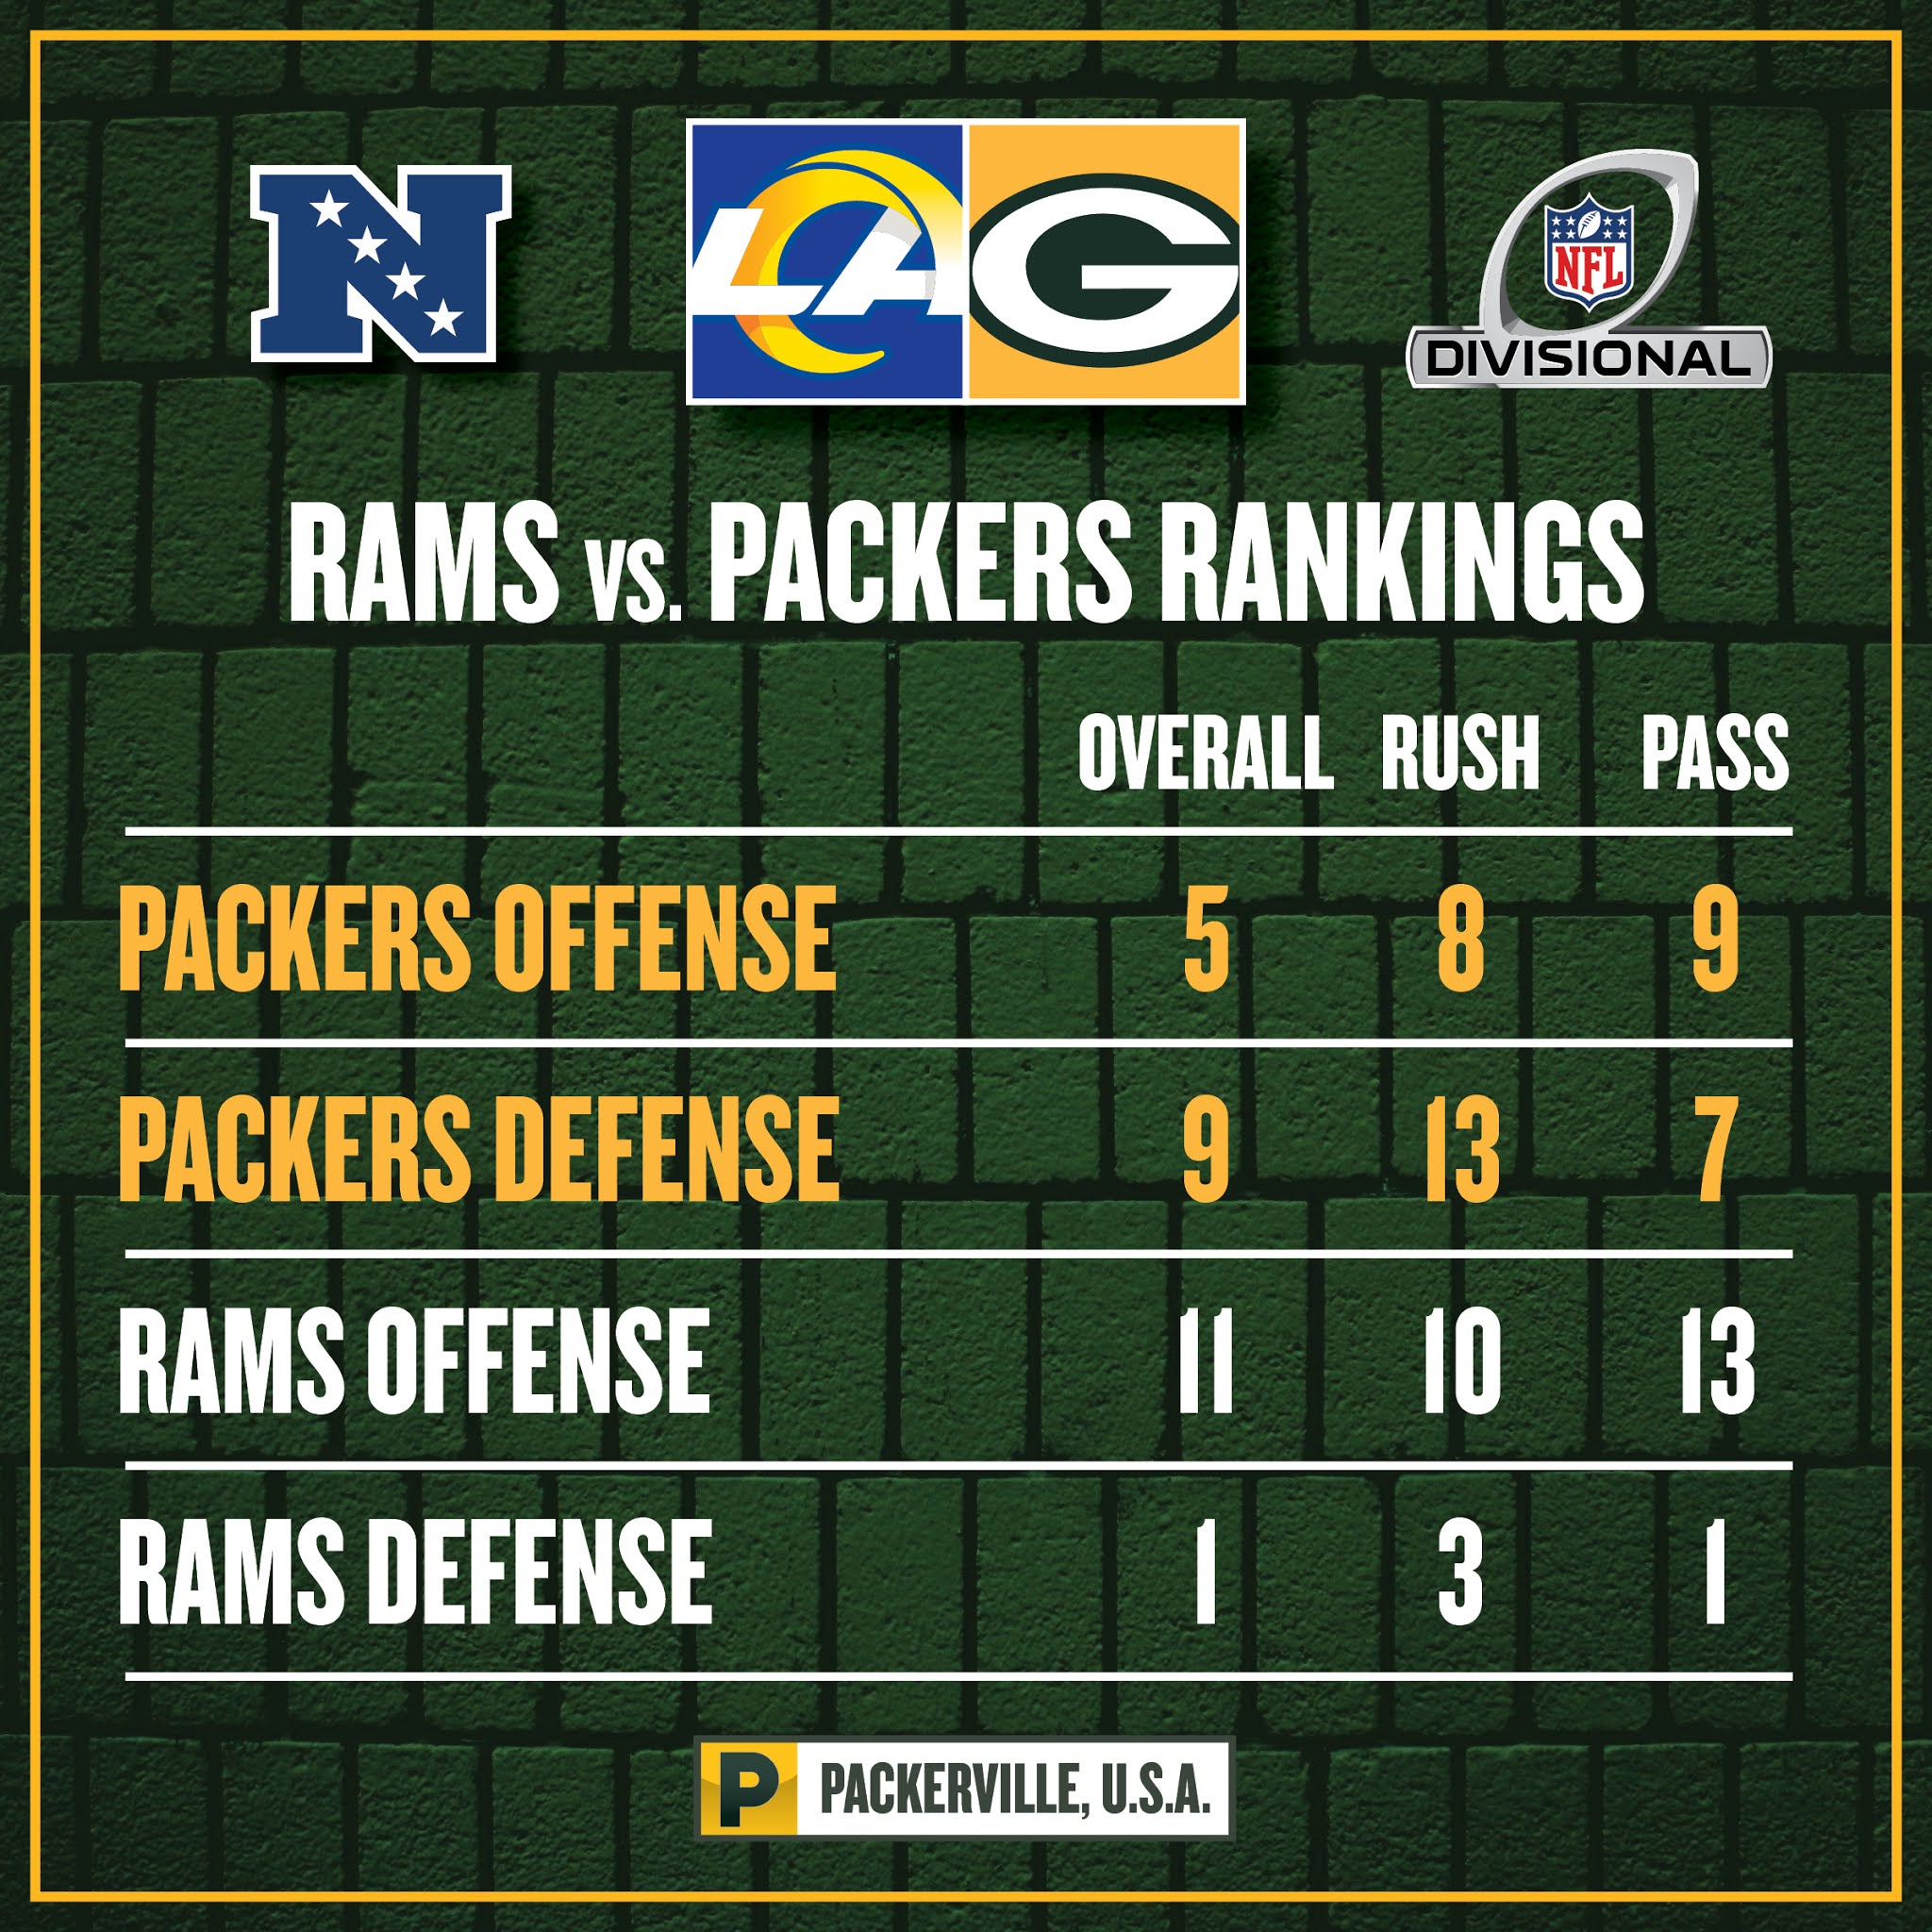 PACKERVILLE, U.S.A. Rams vs. Packers Team Rankings